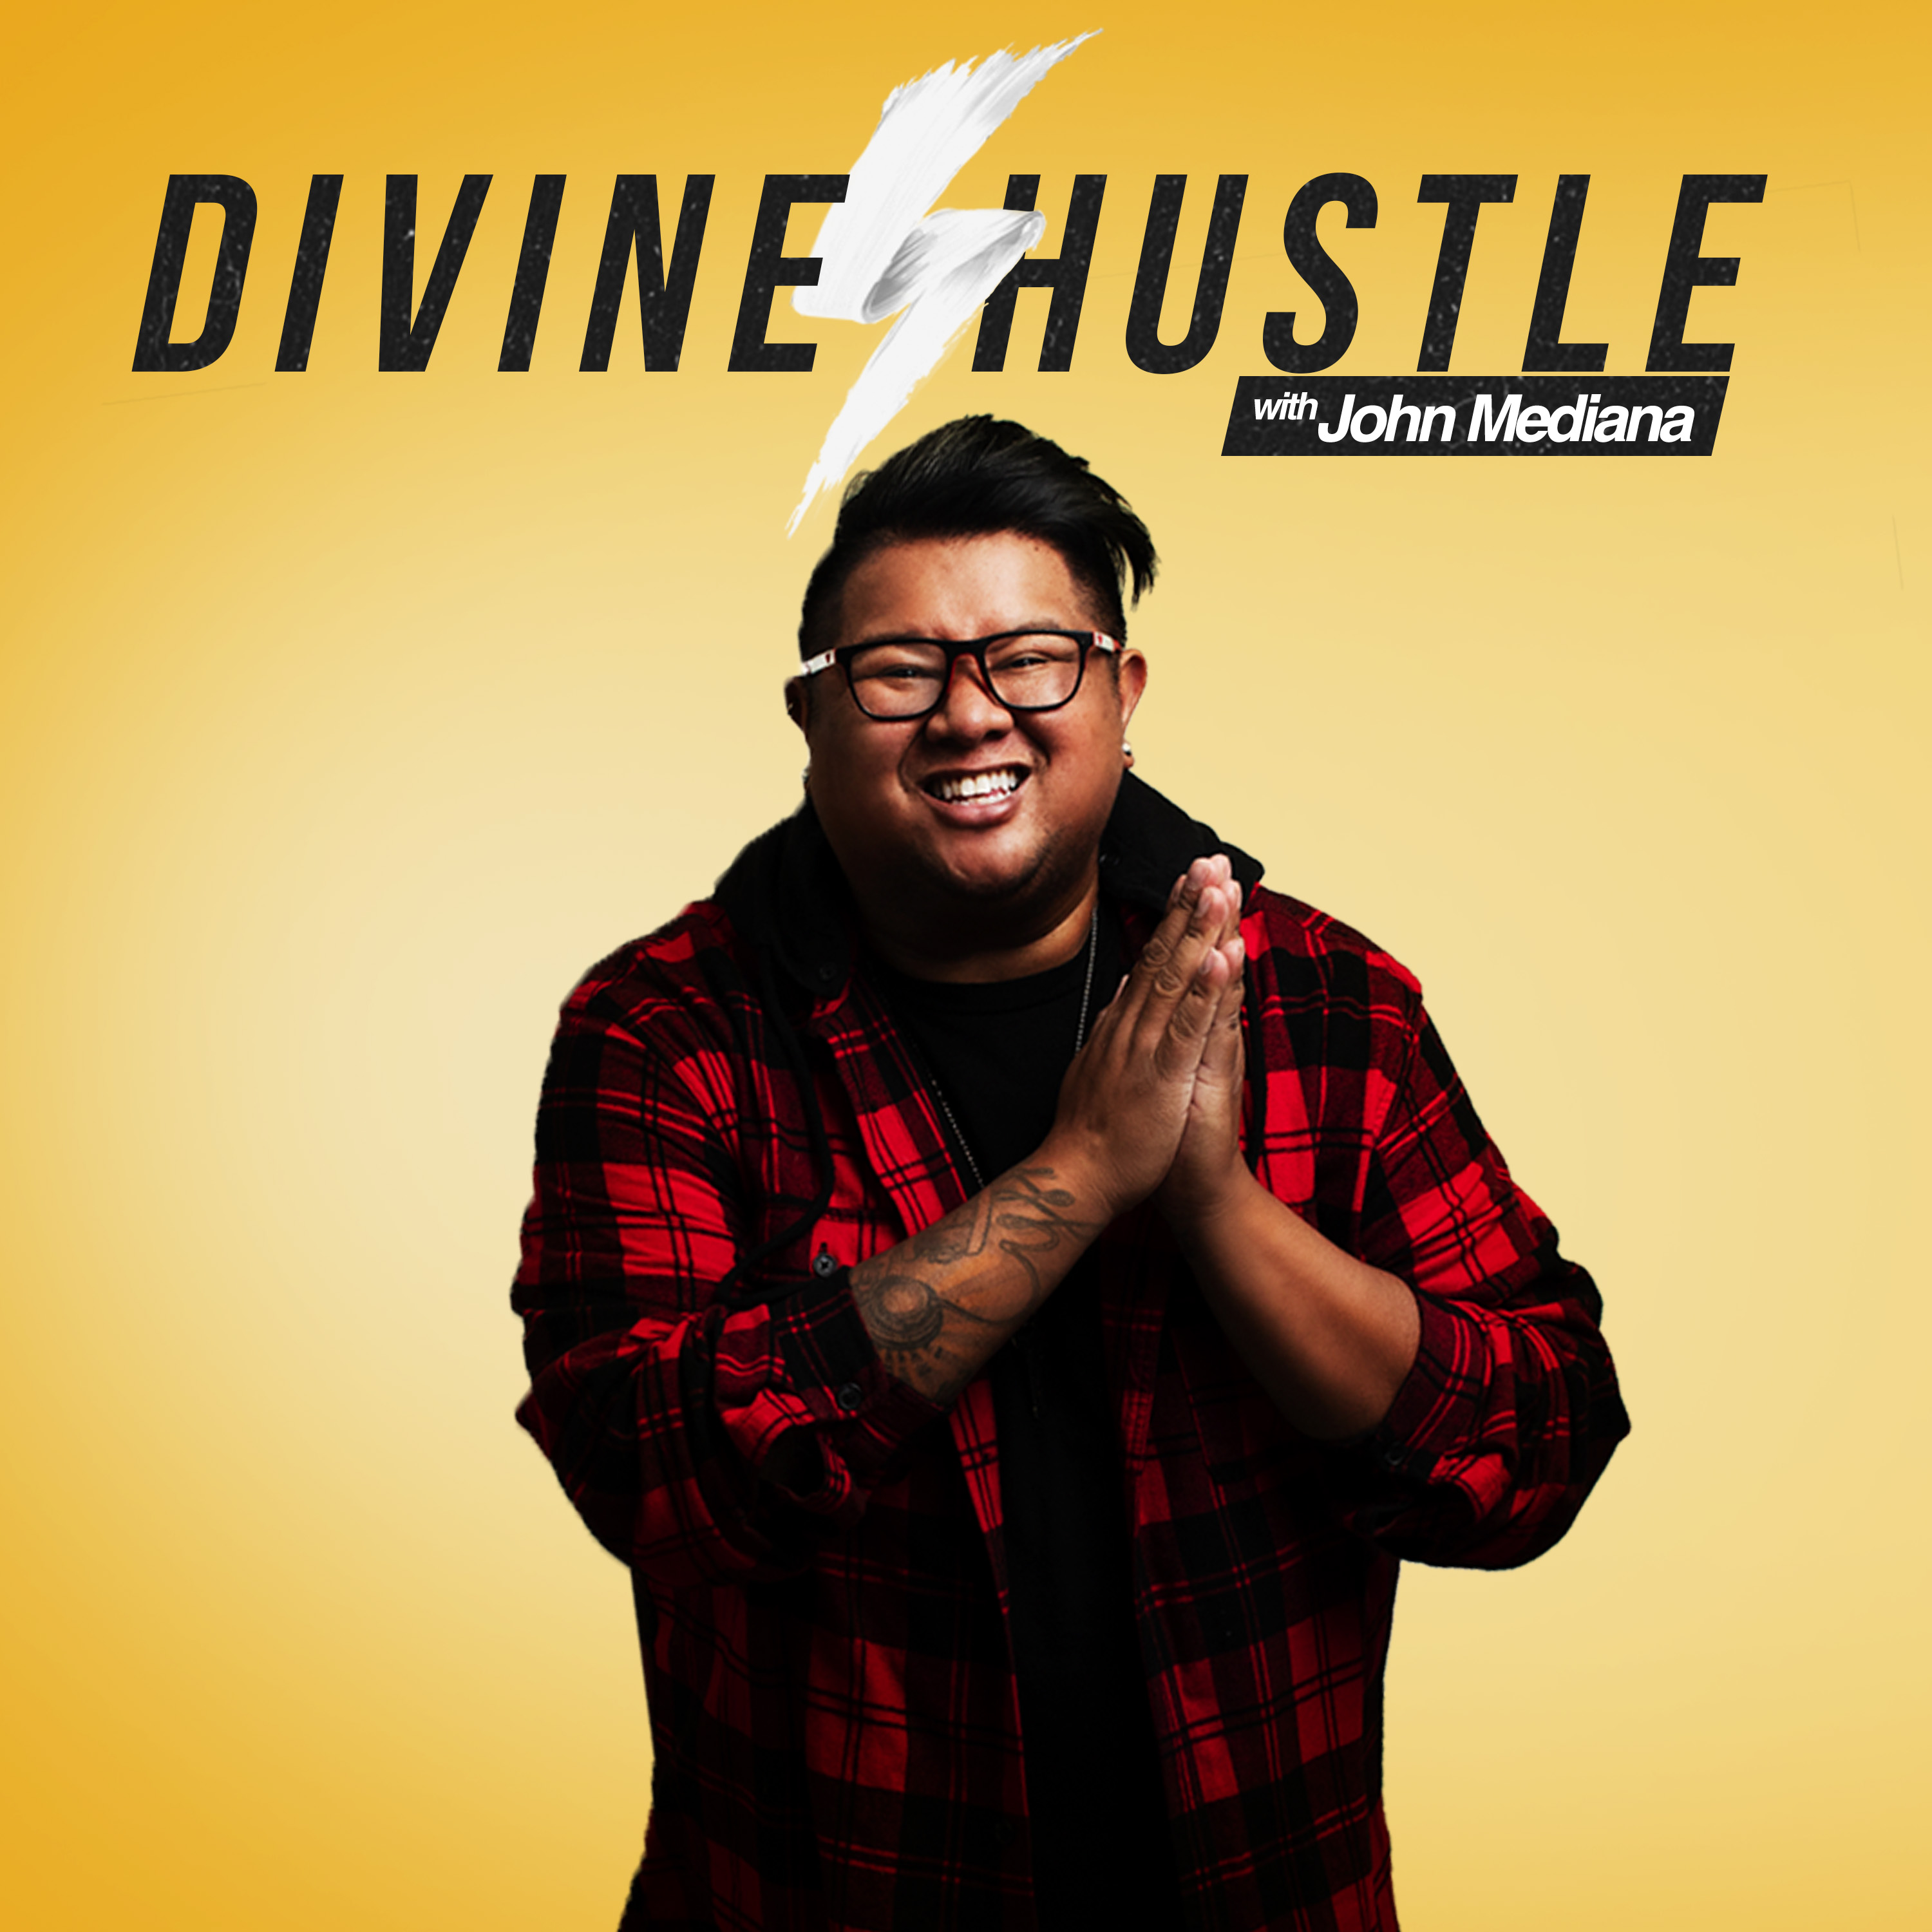 The Divine Hustle Podcast